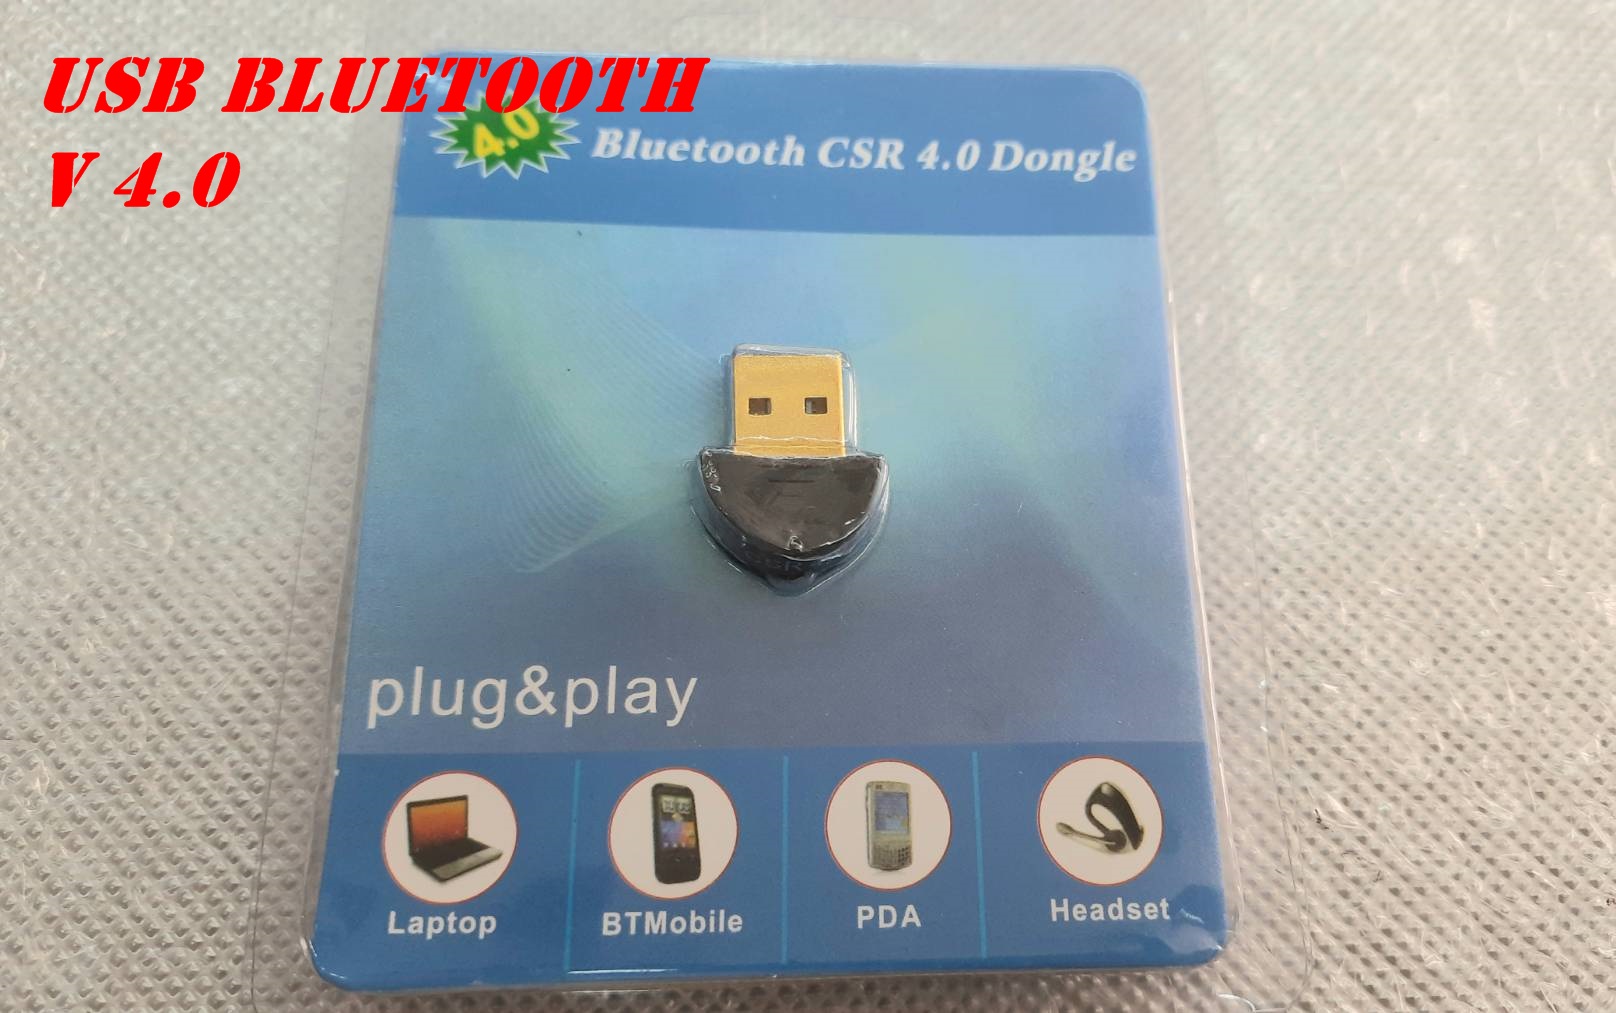 USB BLUETOOTH 4.0 รับได้ ส่งได้ รองรับทุกรุ่น ทุกวินโด้ ใช้ได้ทั้ง pc และโน้ตบุ๊ค รับส่วสัญญานดีมาก ตัวเล็กกระทัดรัต